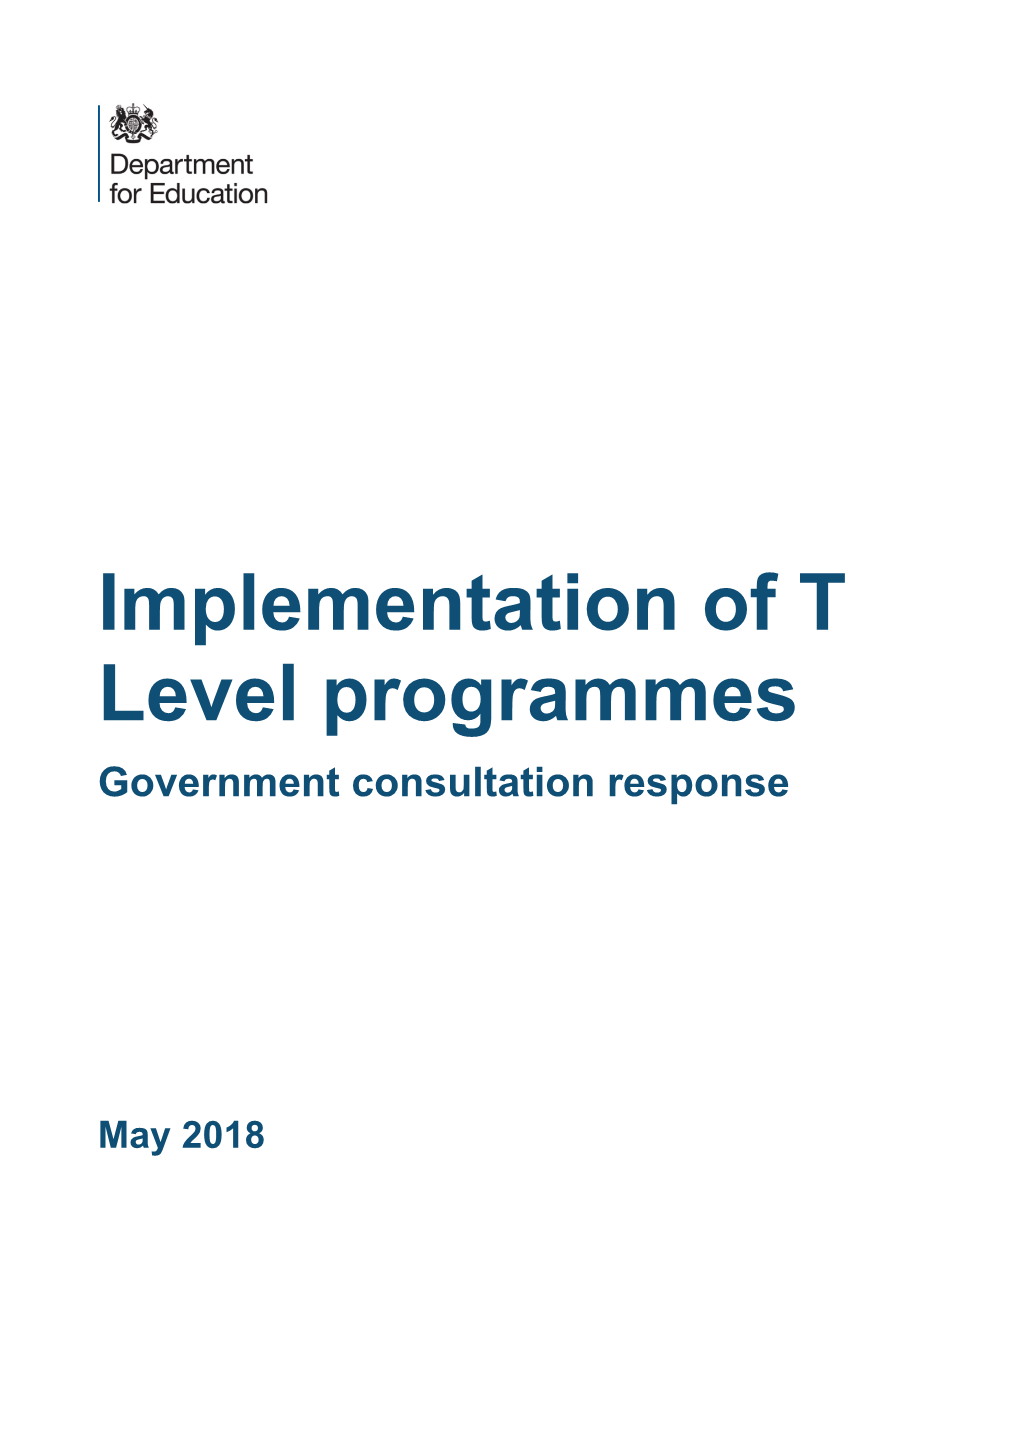 Implementation of T Level Programmes Consultation Response